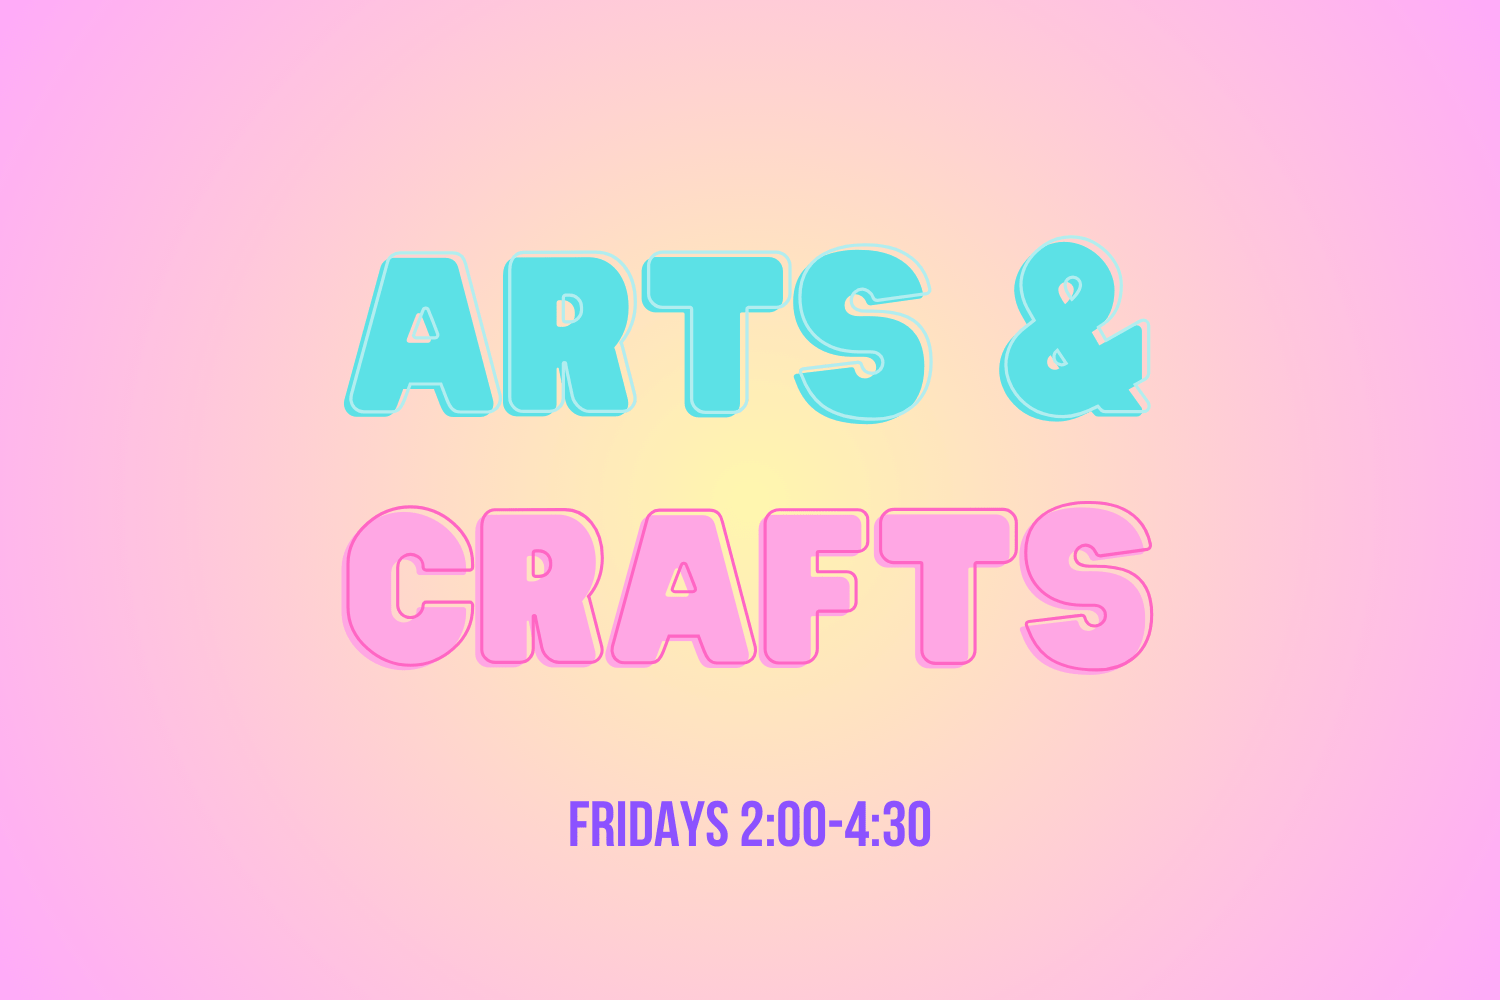 Image that says "arts & crafts: Fridays 2:00-4:30"